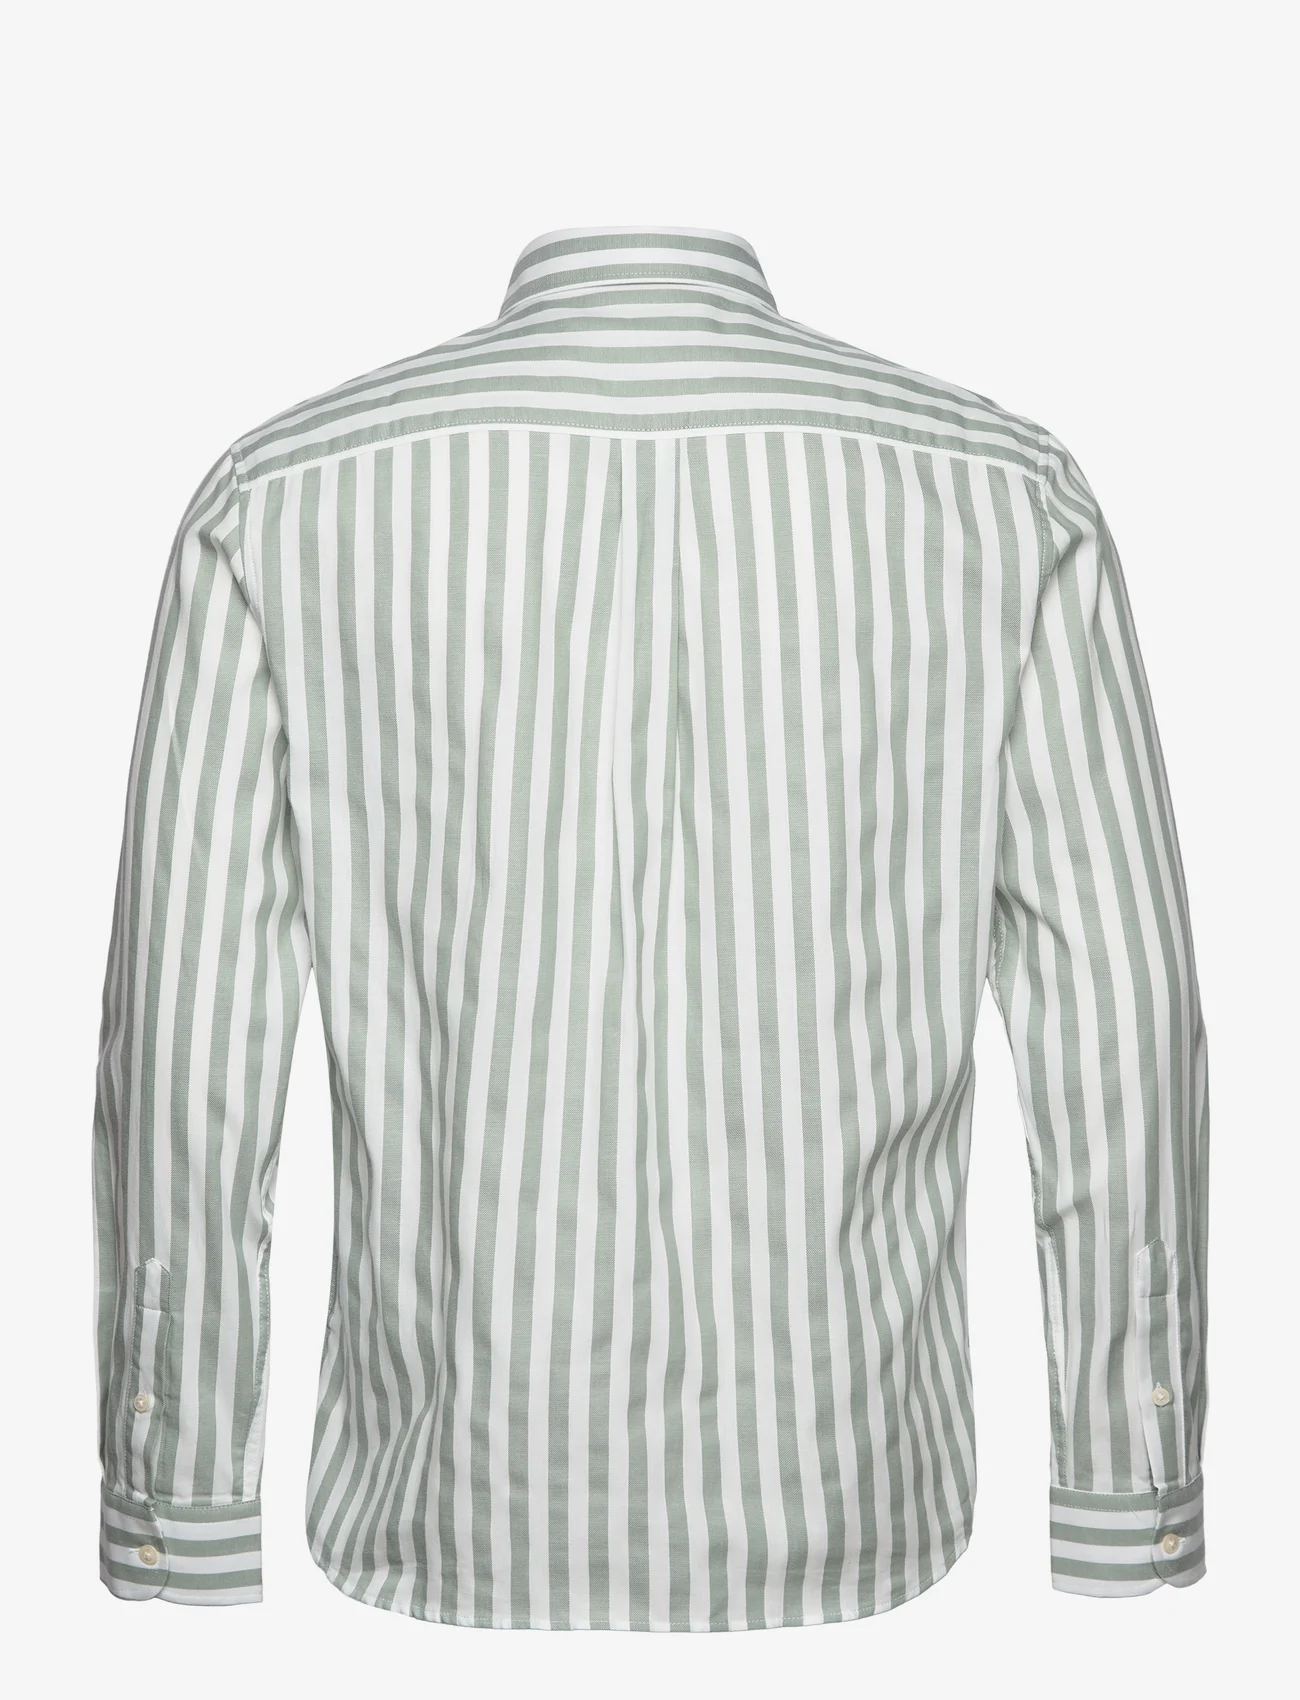 Lexington Clothing - Fred Striped Shirt - casual shirts - green/white stripe - 1